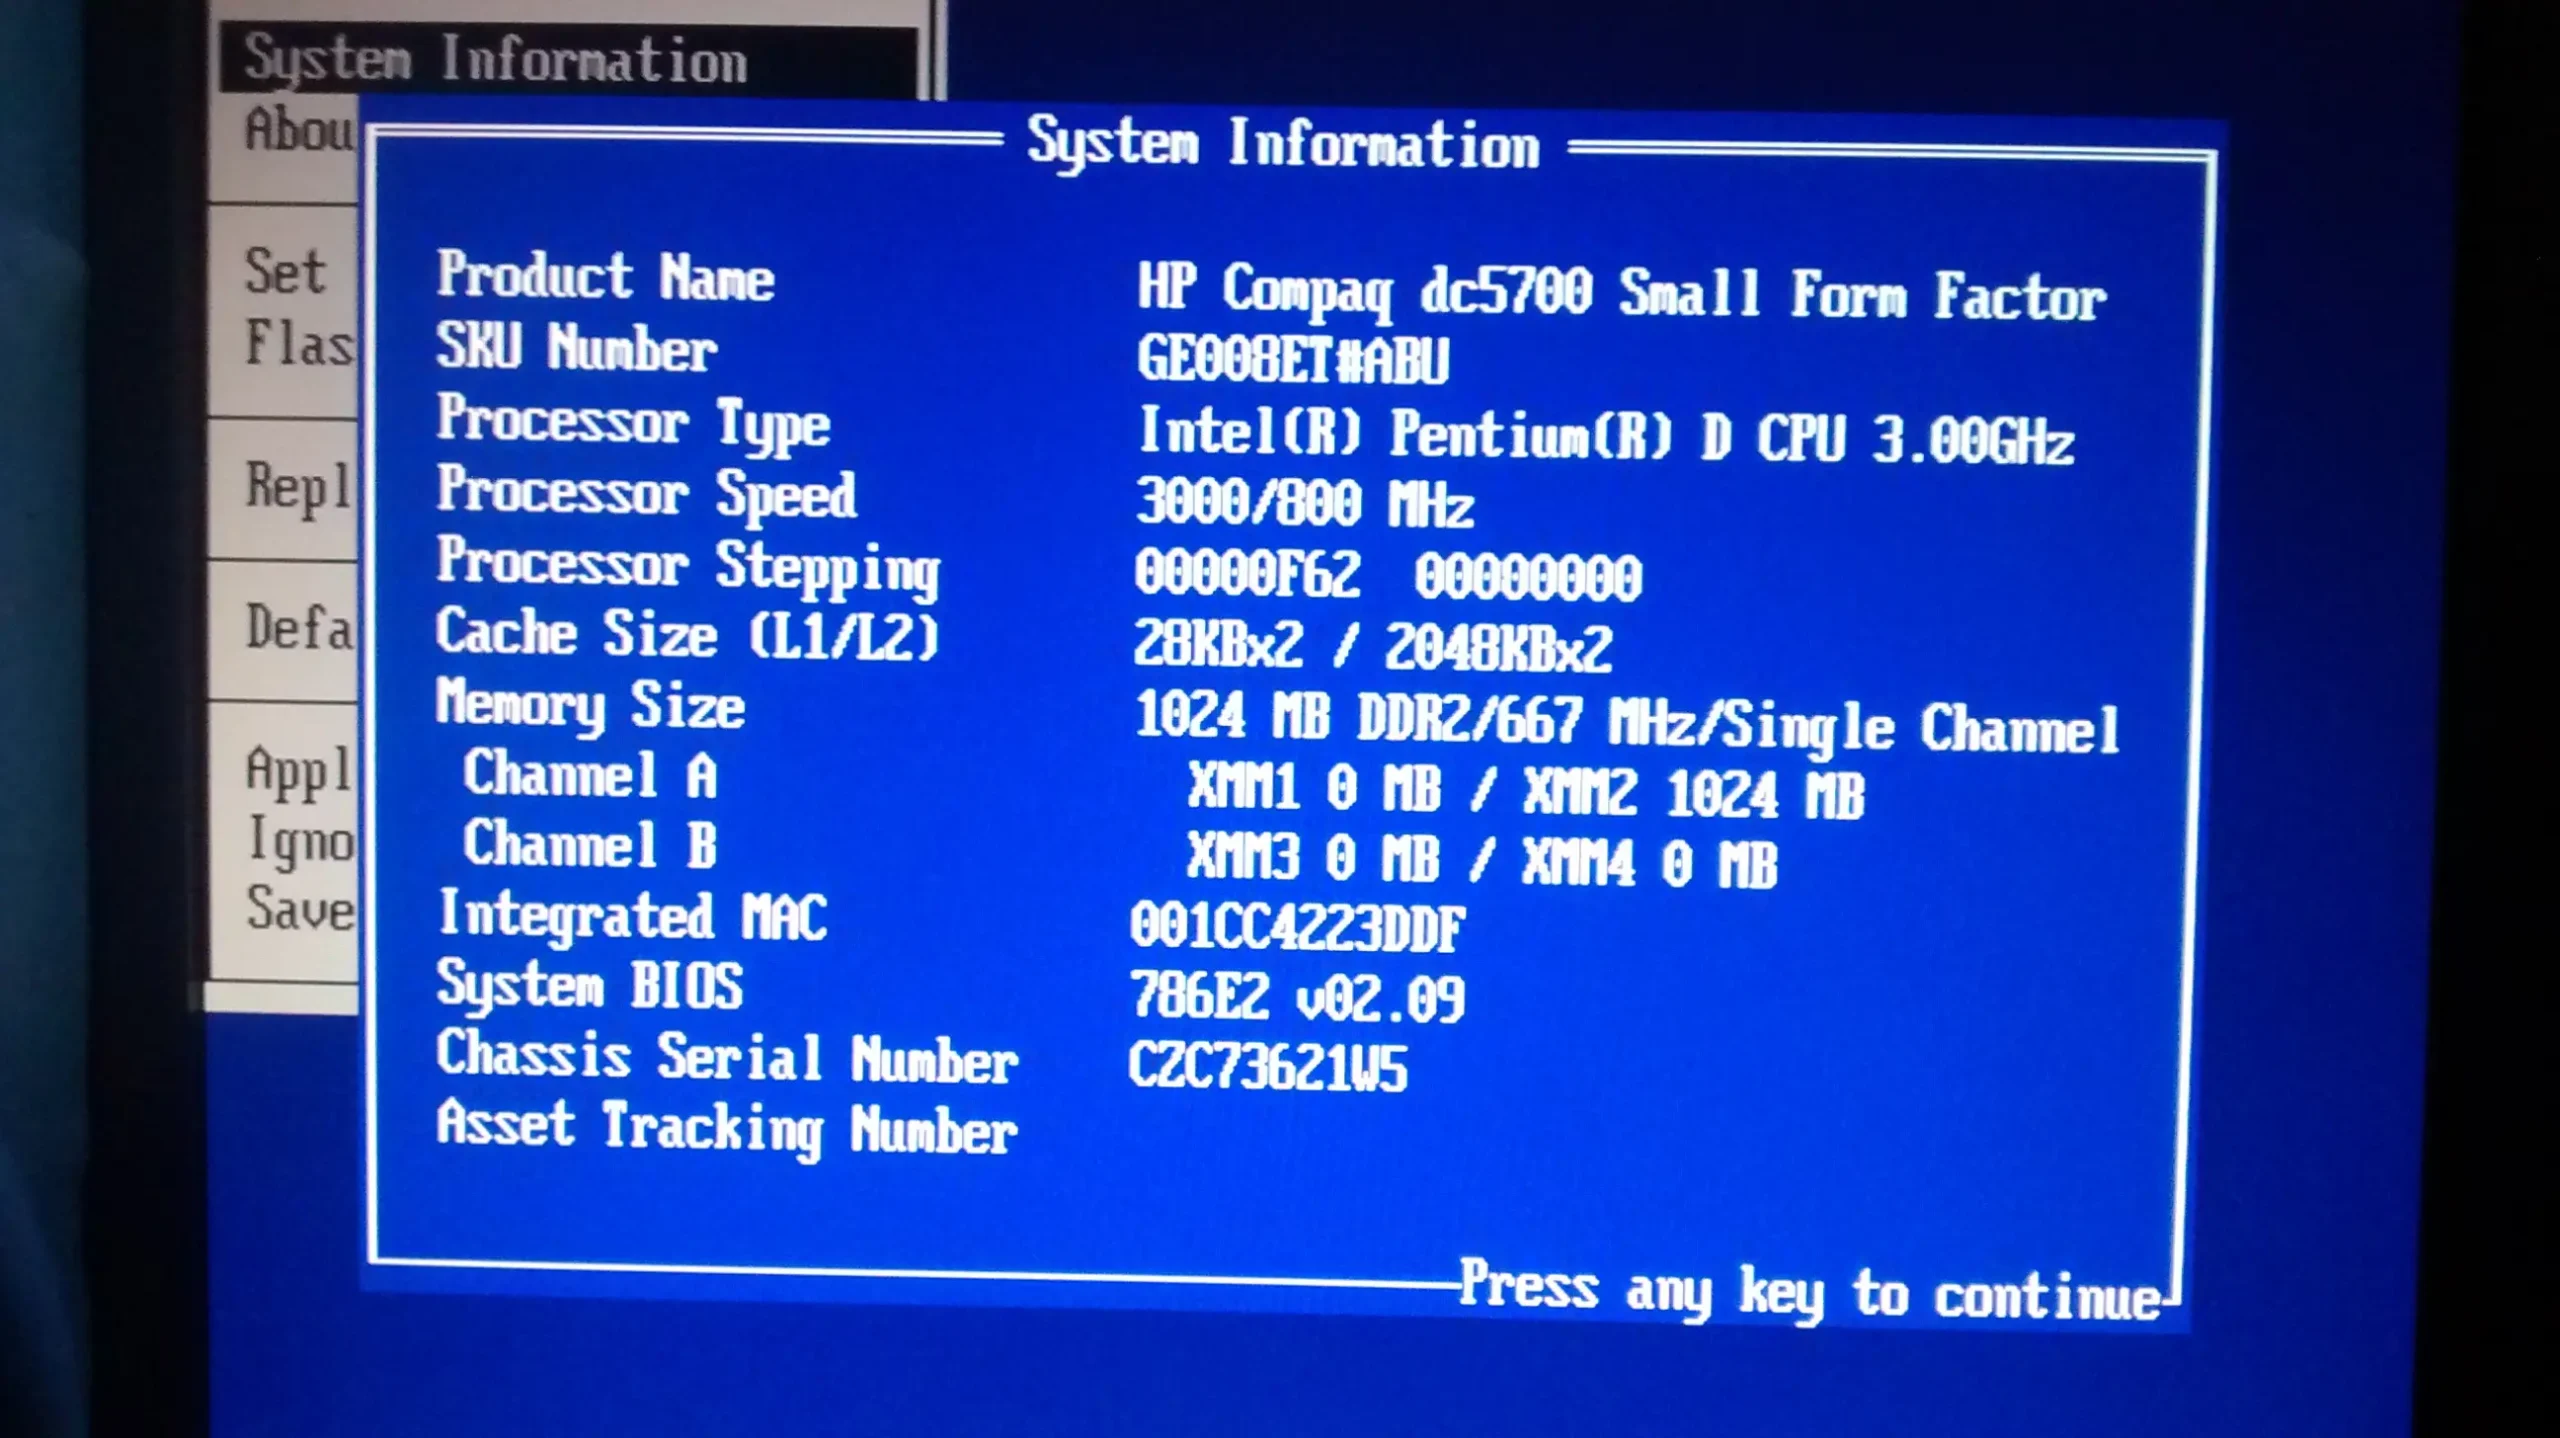 hewlett packard microcode update download - Should I update CPU microcode